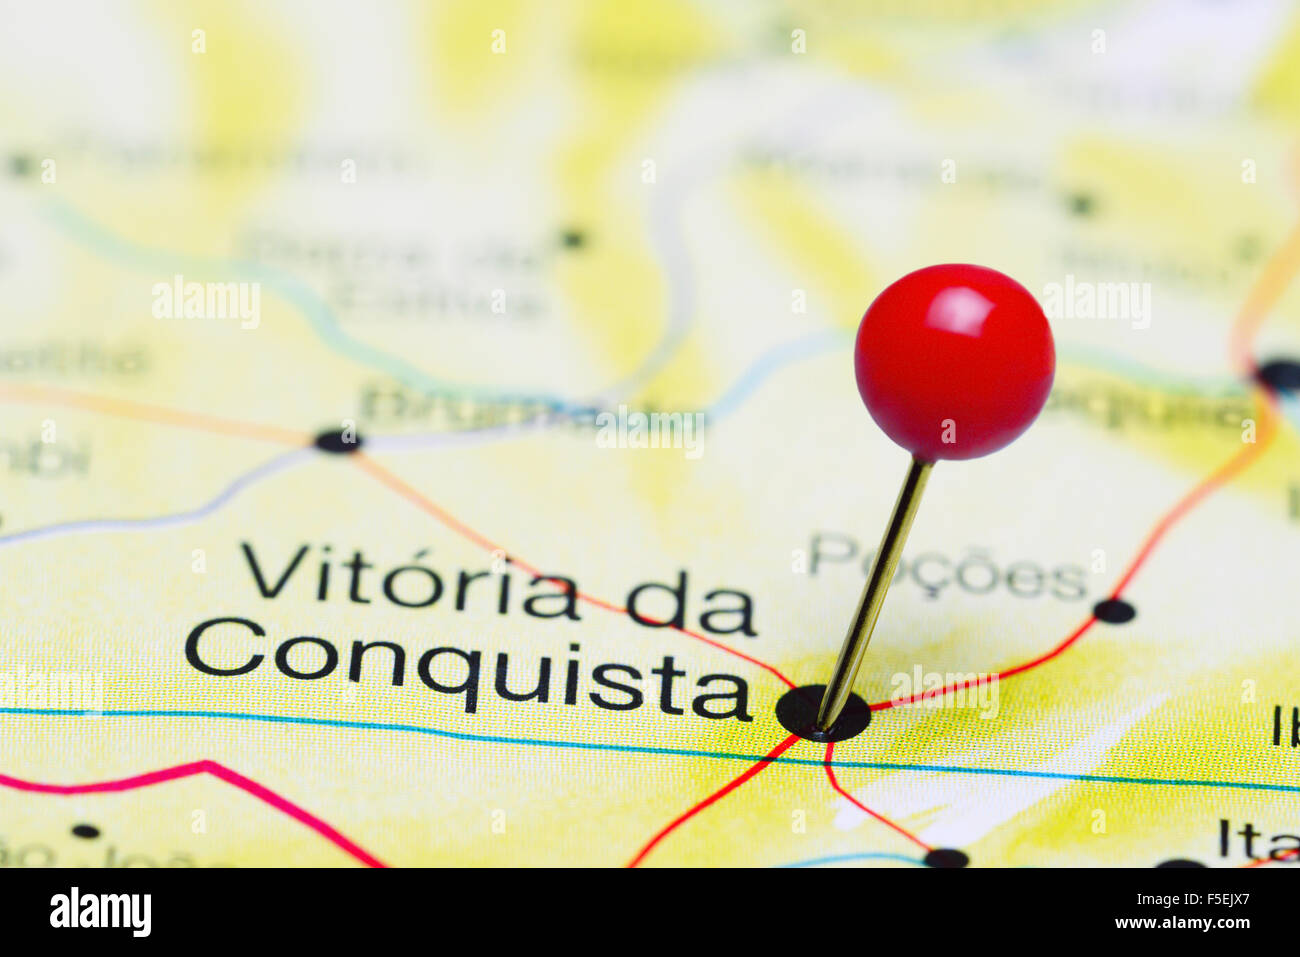 Vitoria da Conquista pinned on a map of Brazil Stock Photo